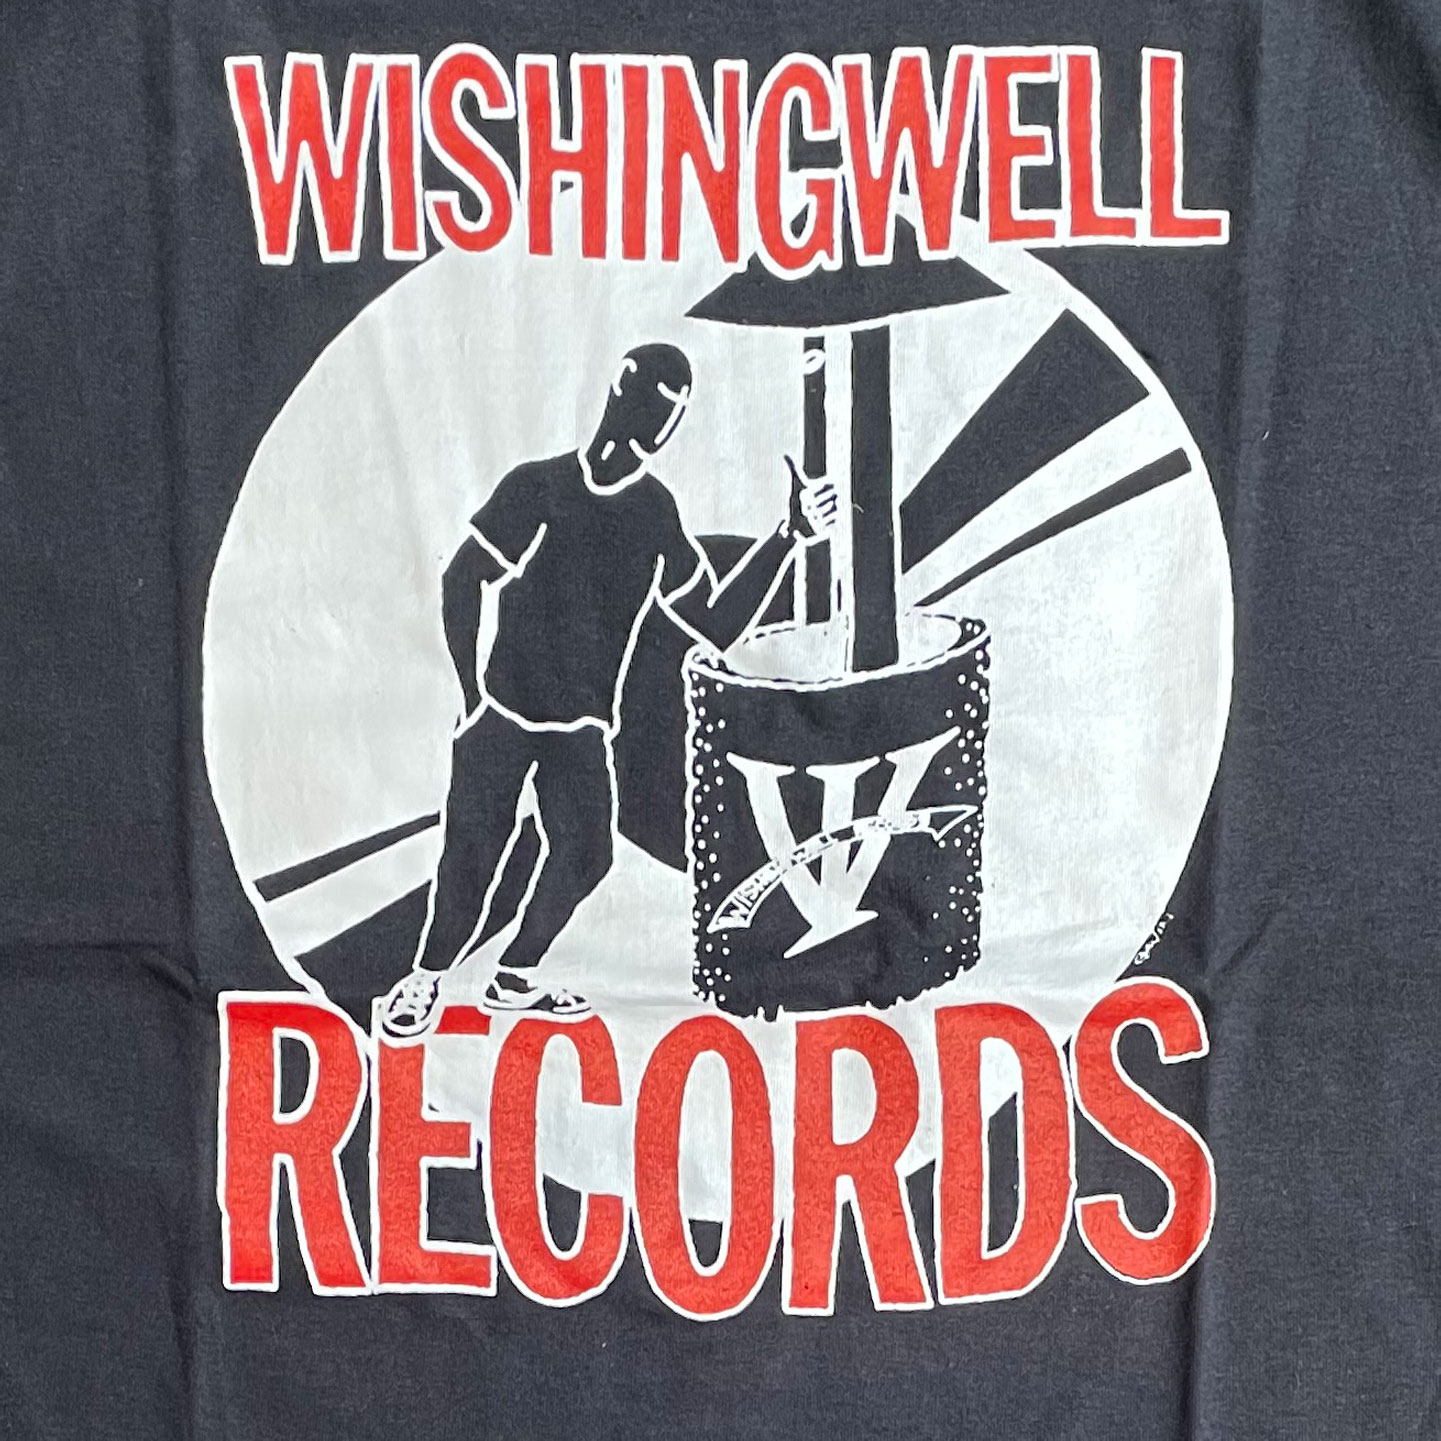 WISHINGWELL RECORDS Tシャツ